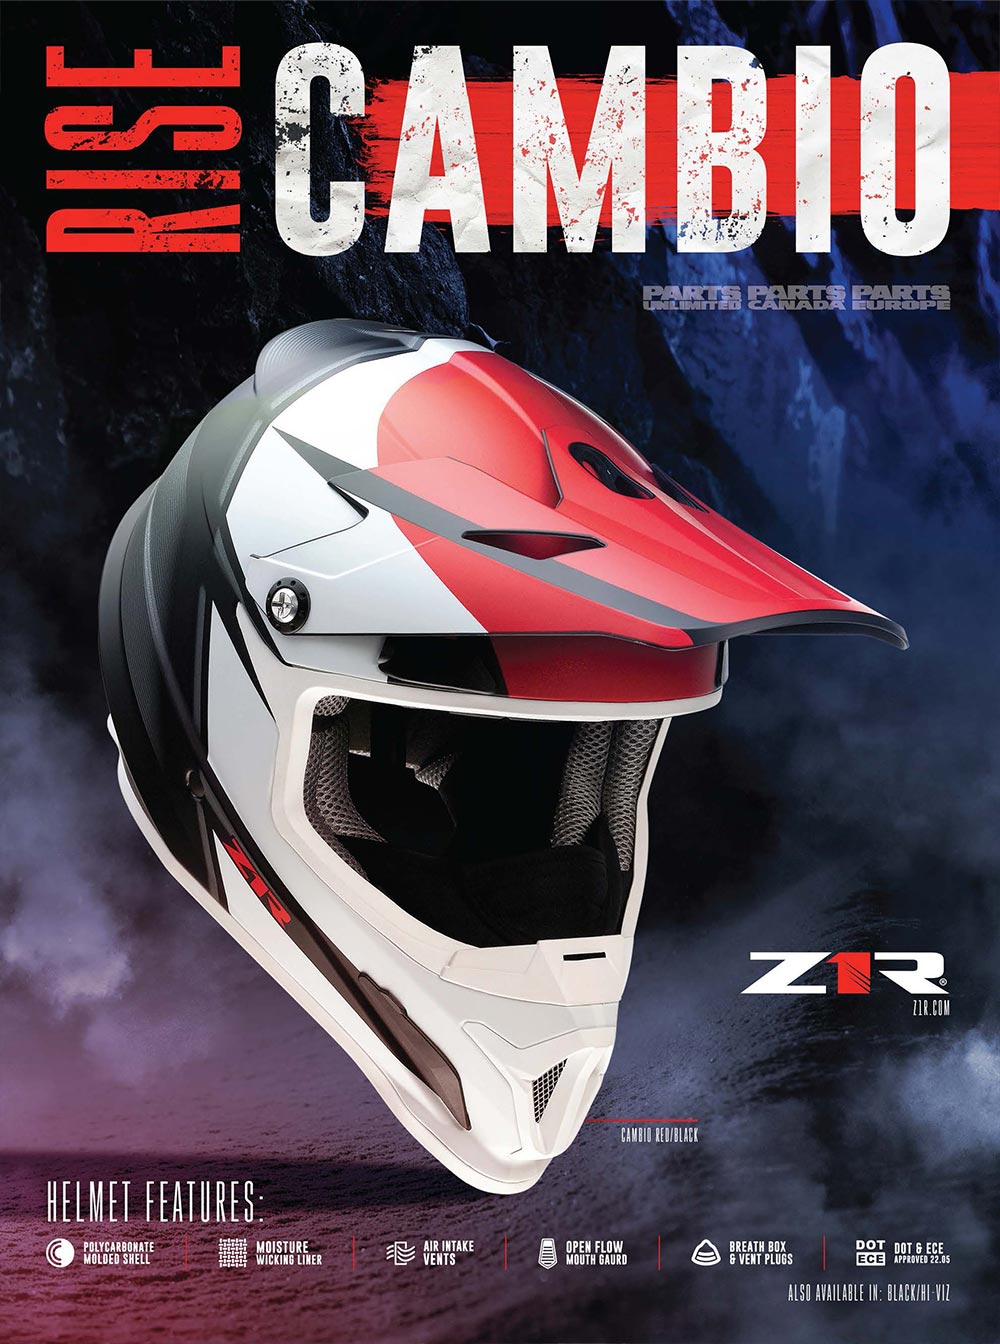 Z1R Advertisement